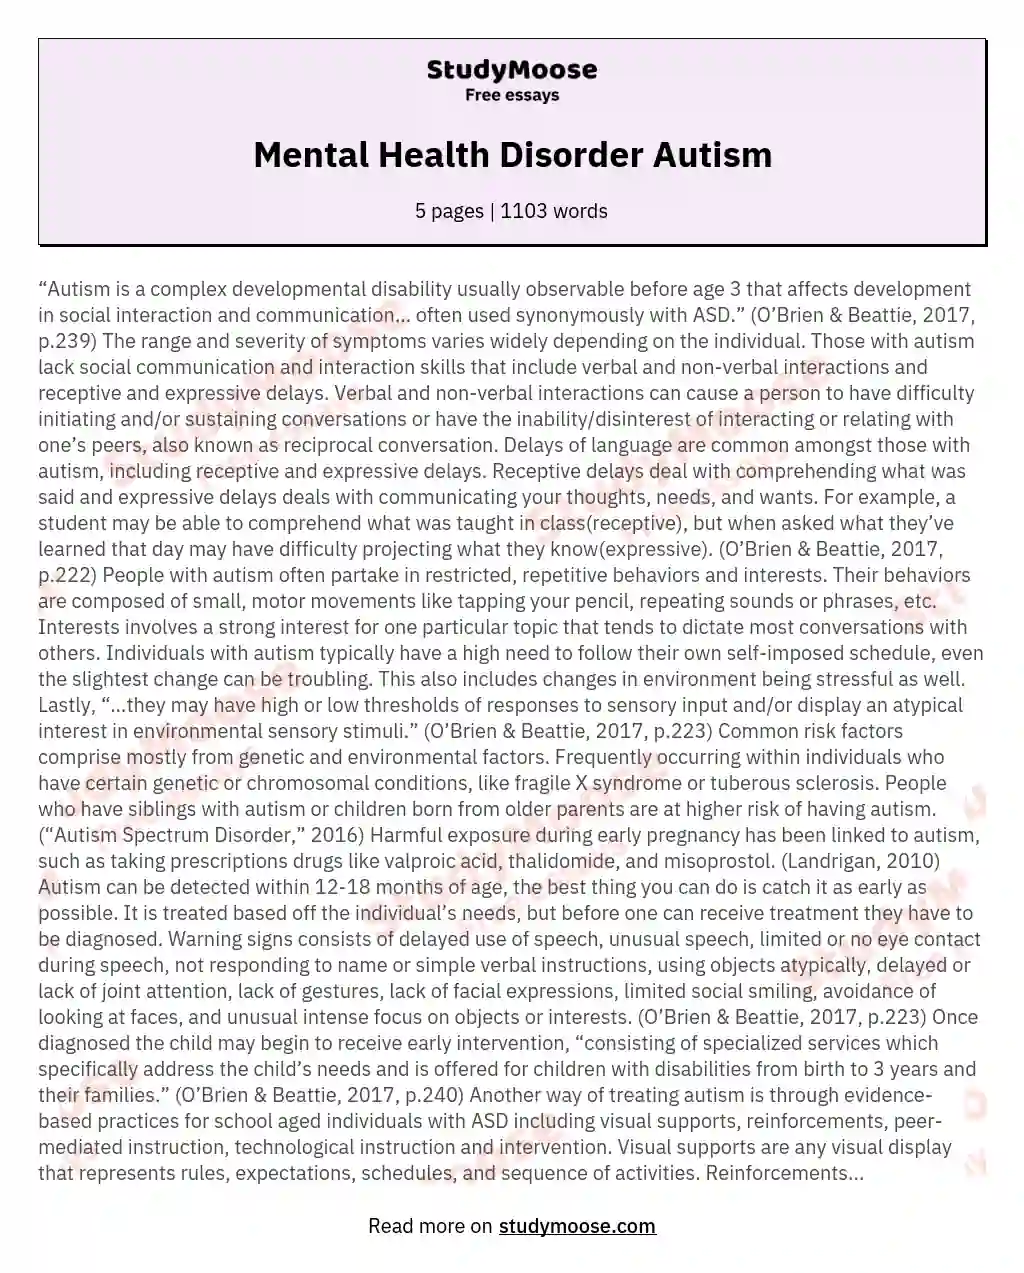 Mental Health Disorder Autism essay